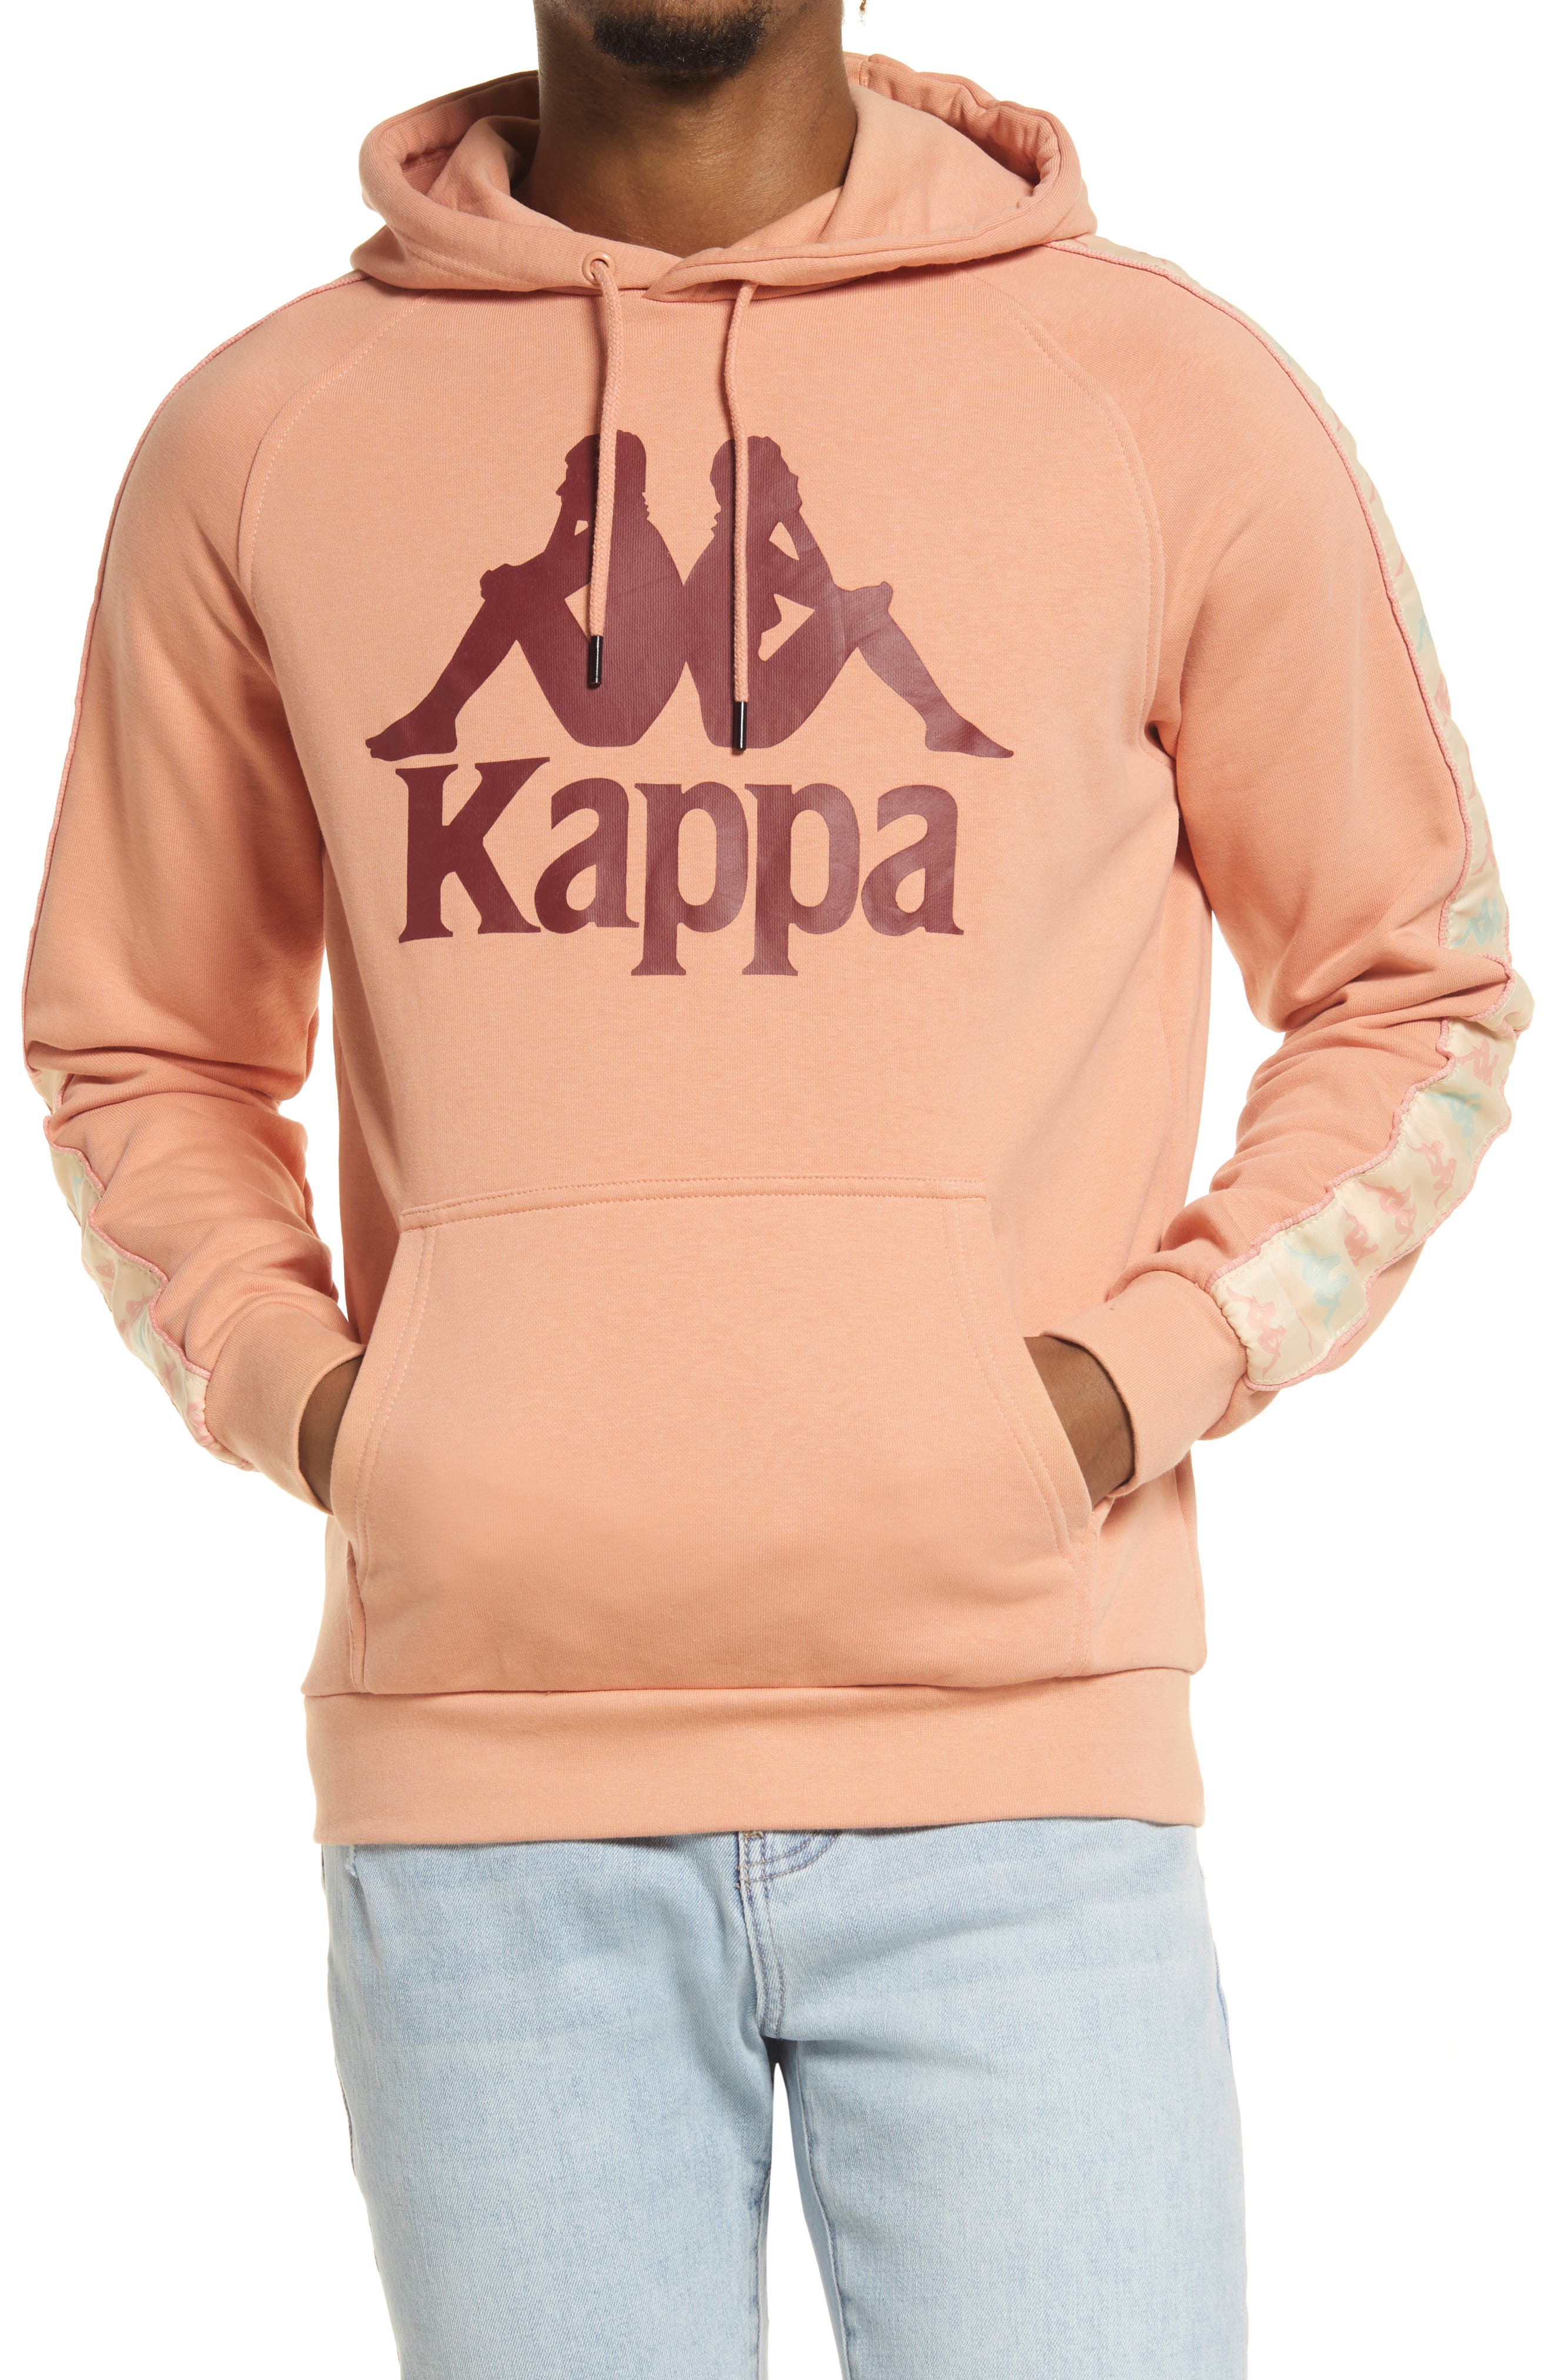 Kappa 222 Banda Hurtado-3 Hooded Sweatshirt in Pink Coral-Beige-Green at Nordstrom, Size Medium